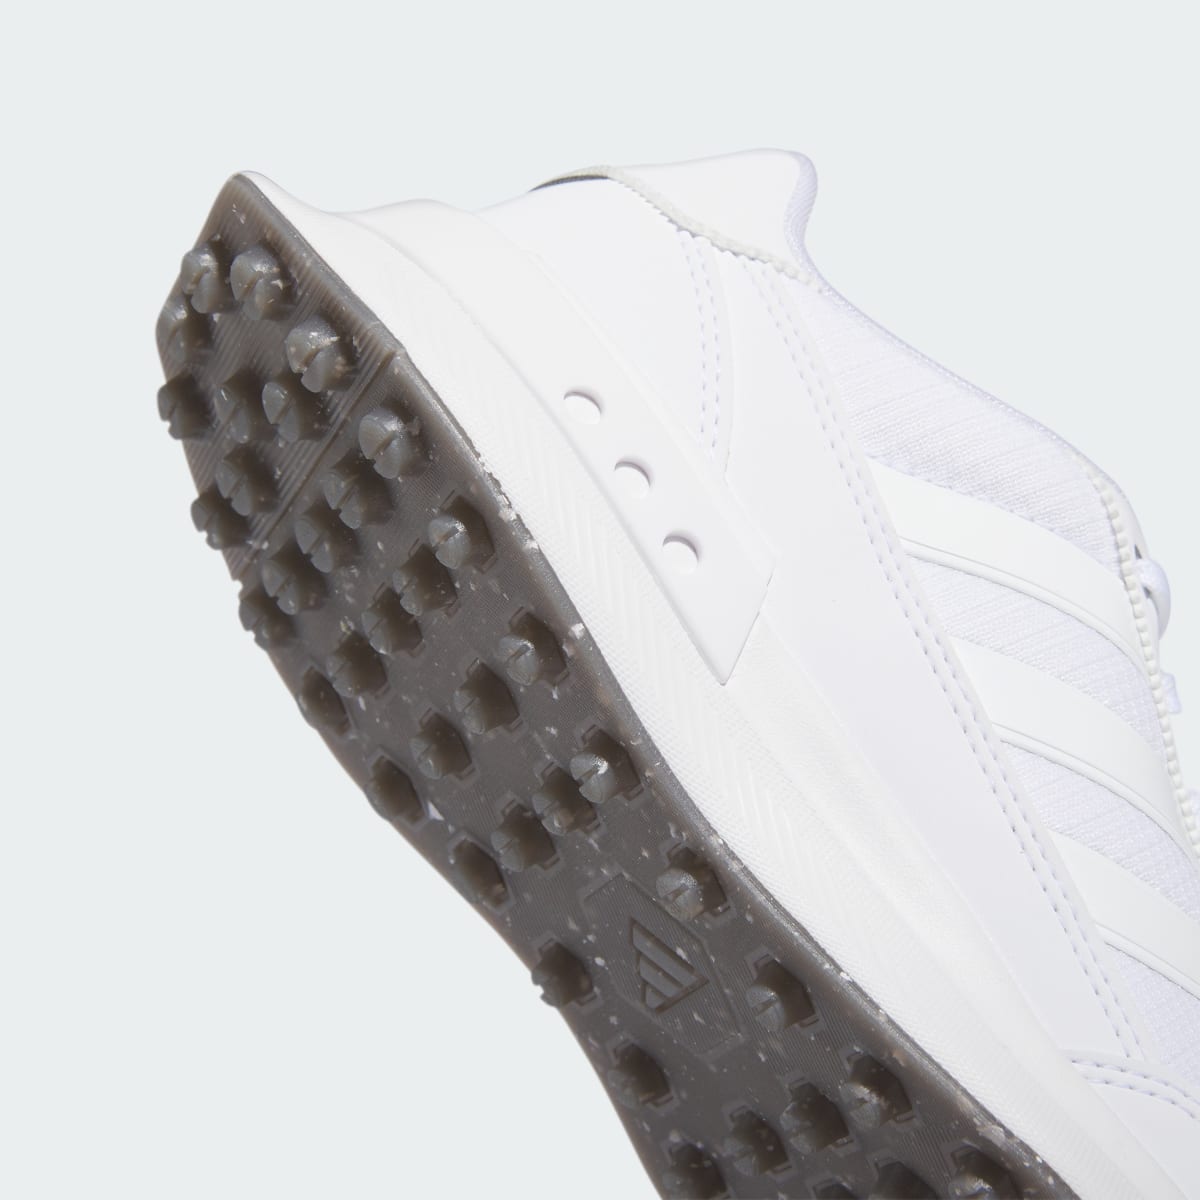 Adidas Scarpe da golf S2G Spikeless 24. 4